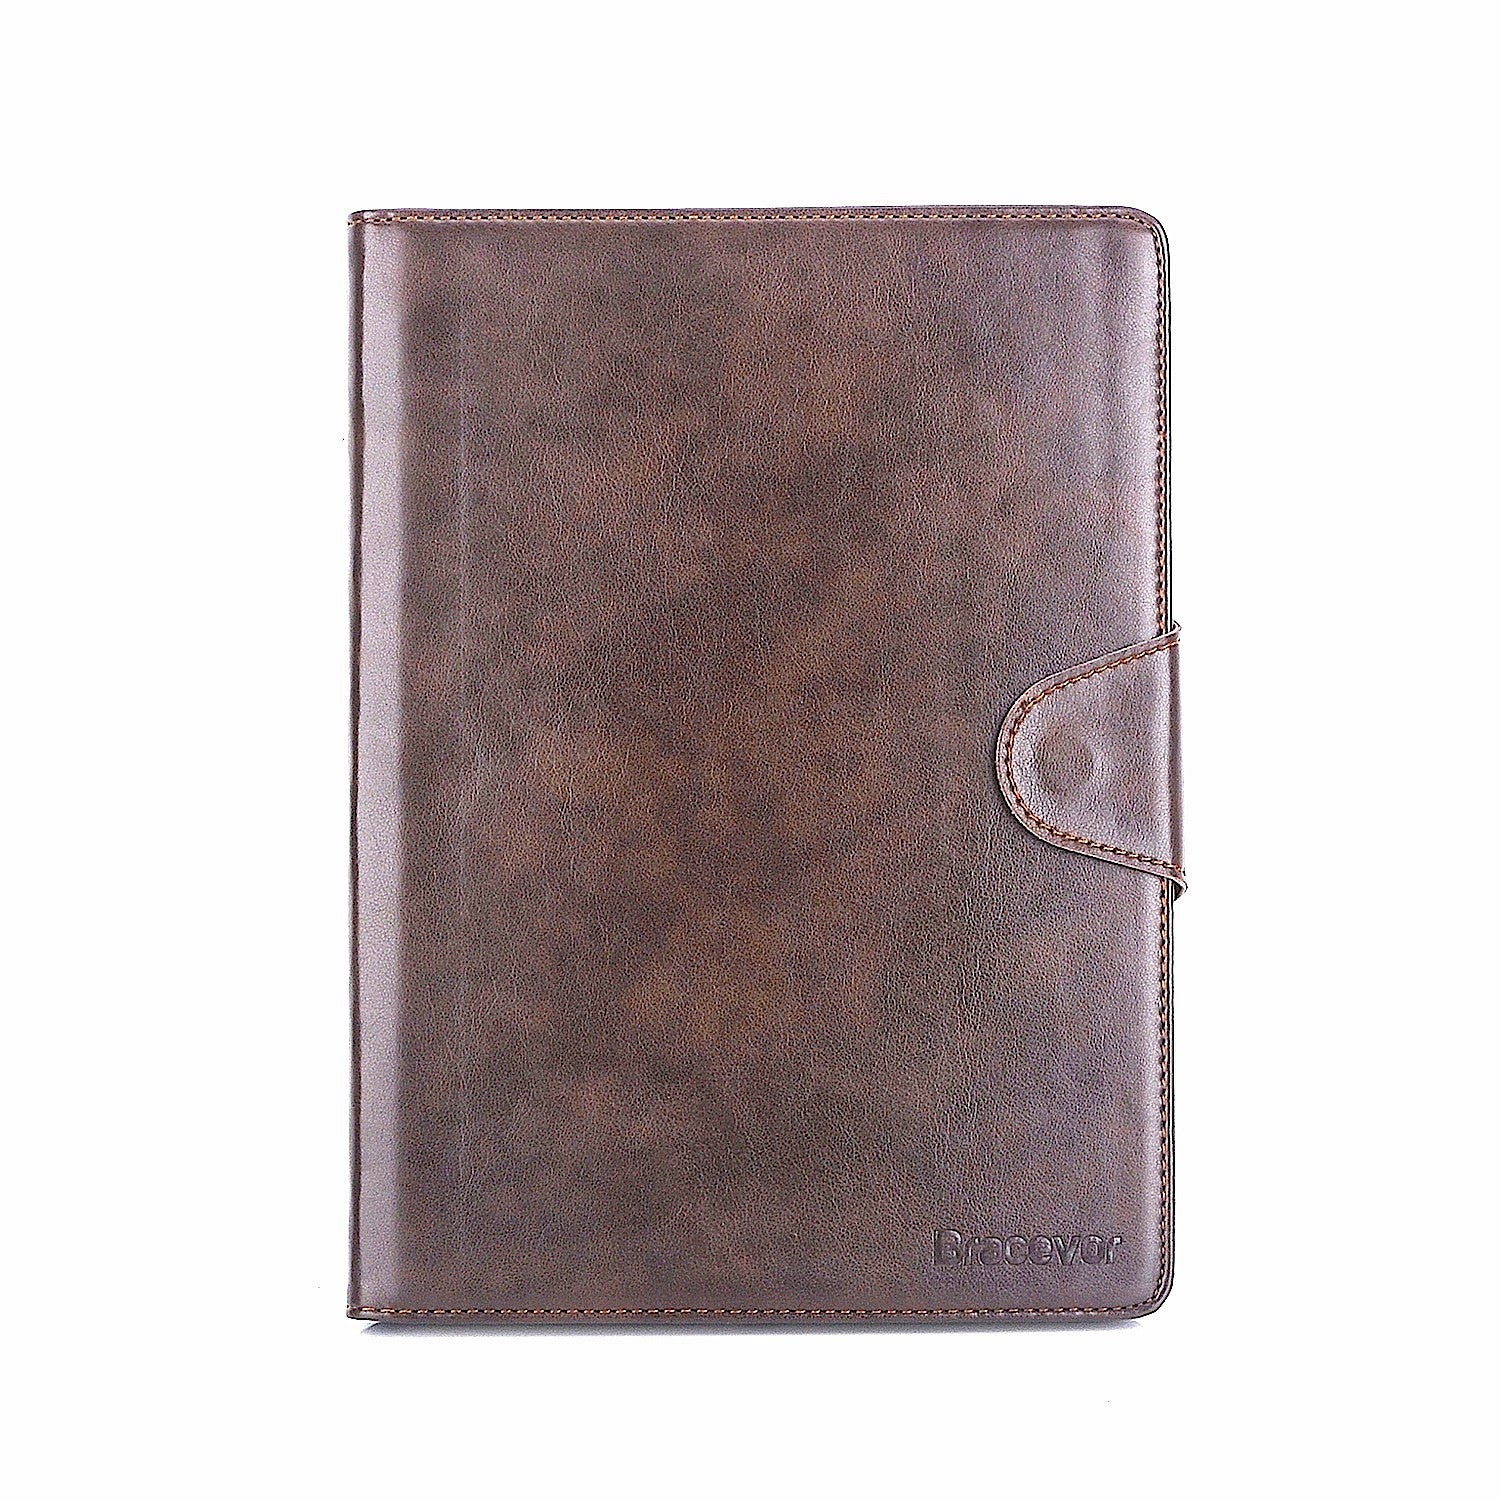 Bracevor Smart Leather Book Case Folio Cover for Apple iPad Air 2 - Brown